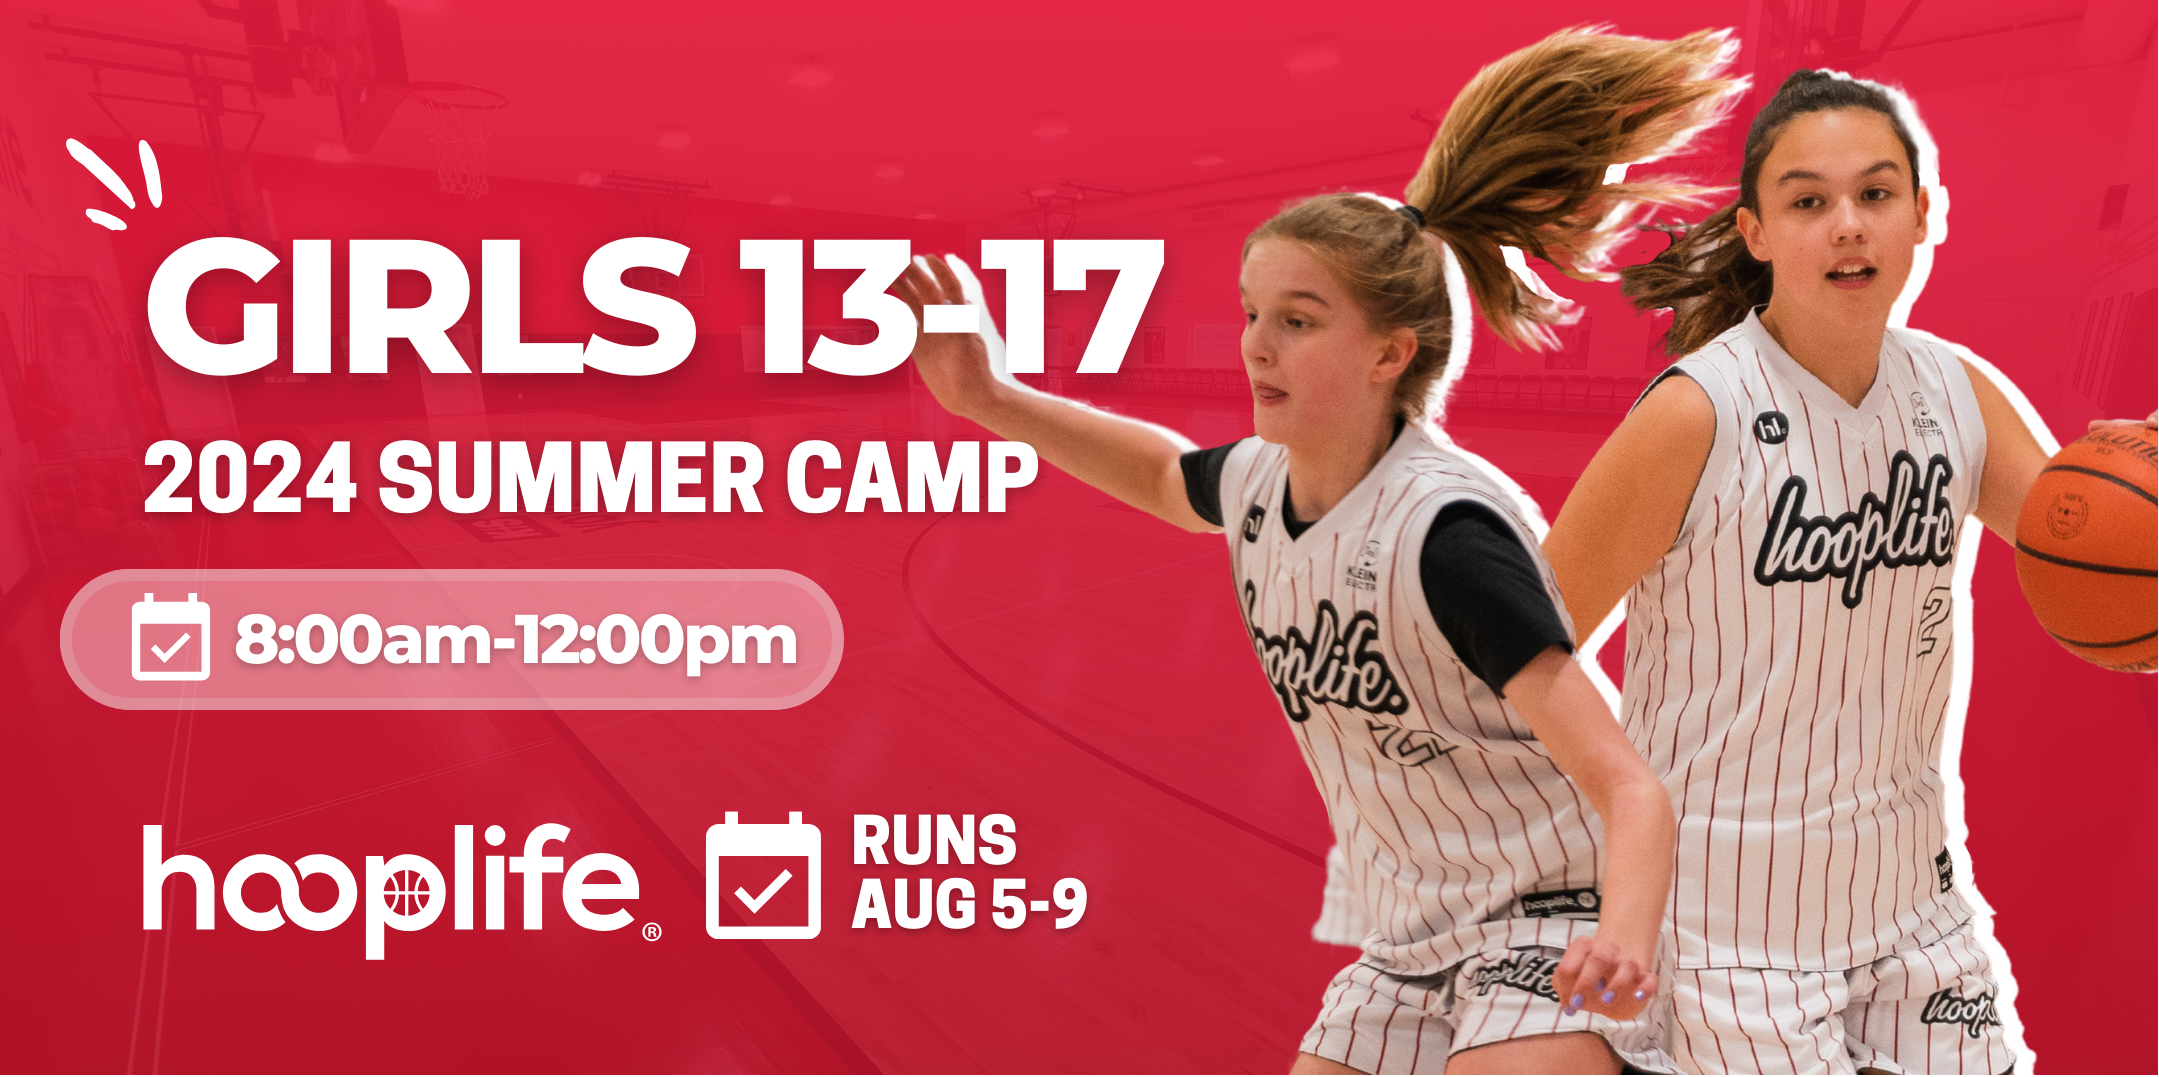 Girls 13-17 Summer Camp | Aug 5-9